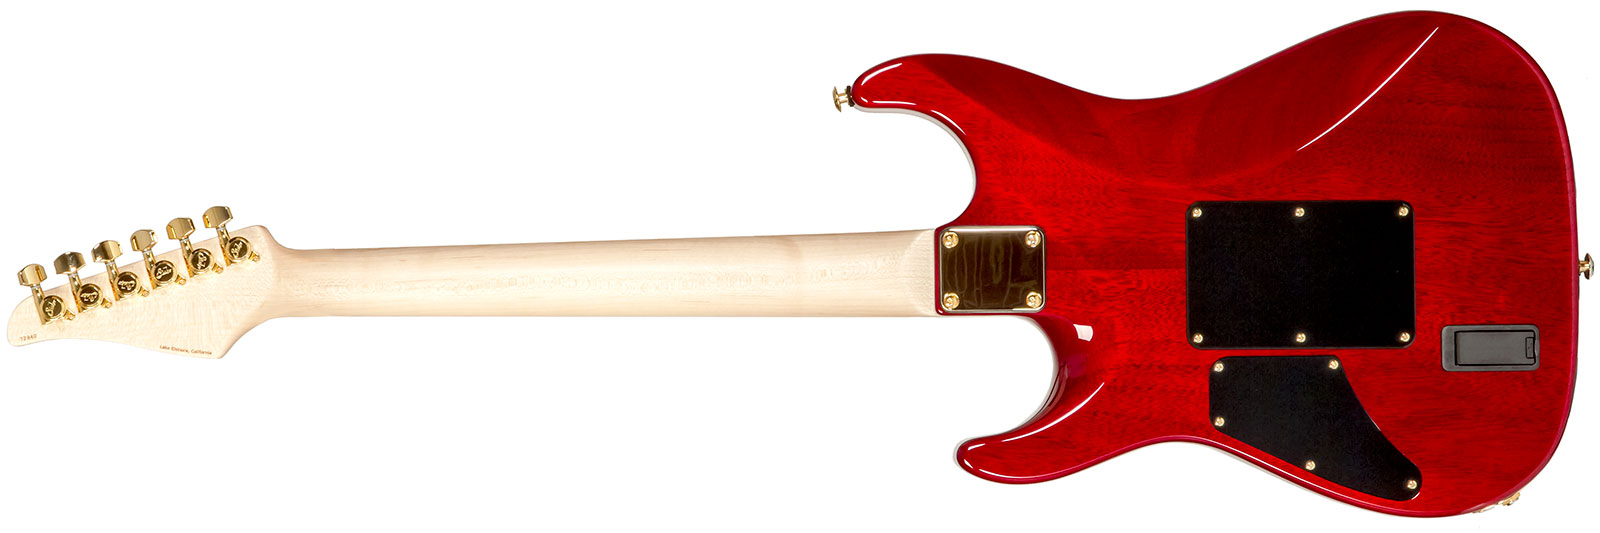 Suhr Standard Legacy 01-ltd-0030 Hss Emg Fr Rw #72940 - Aged Cherry Burst - Str shape electric guitar - Variation 1